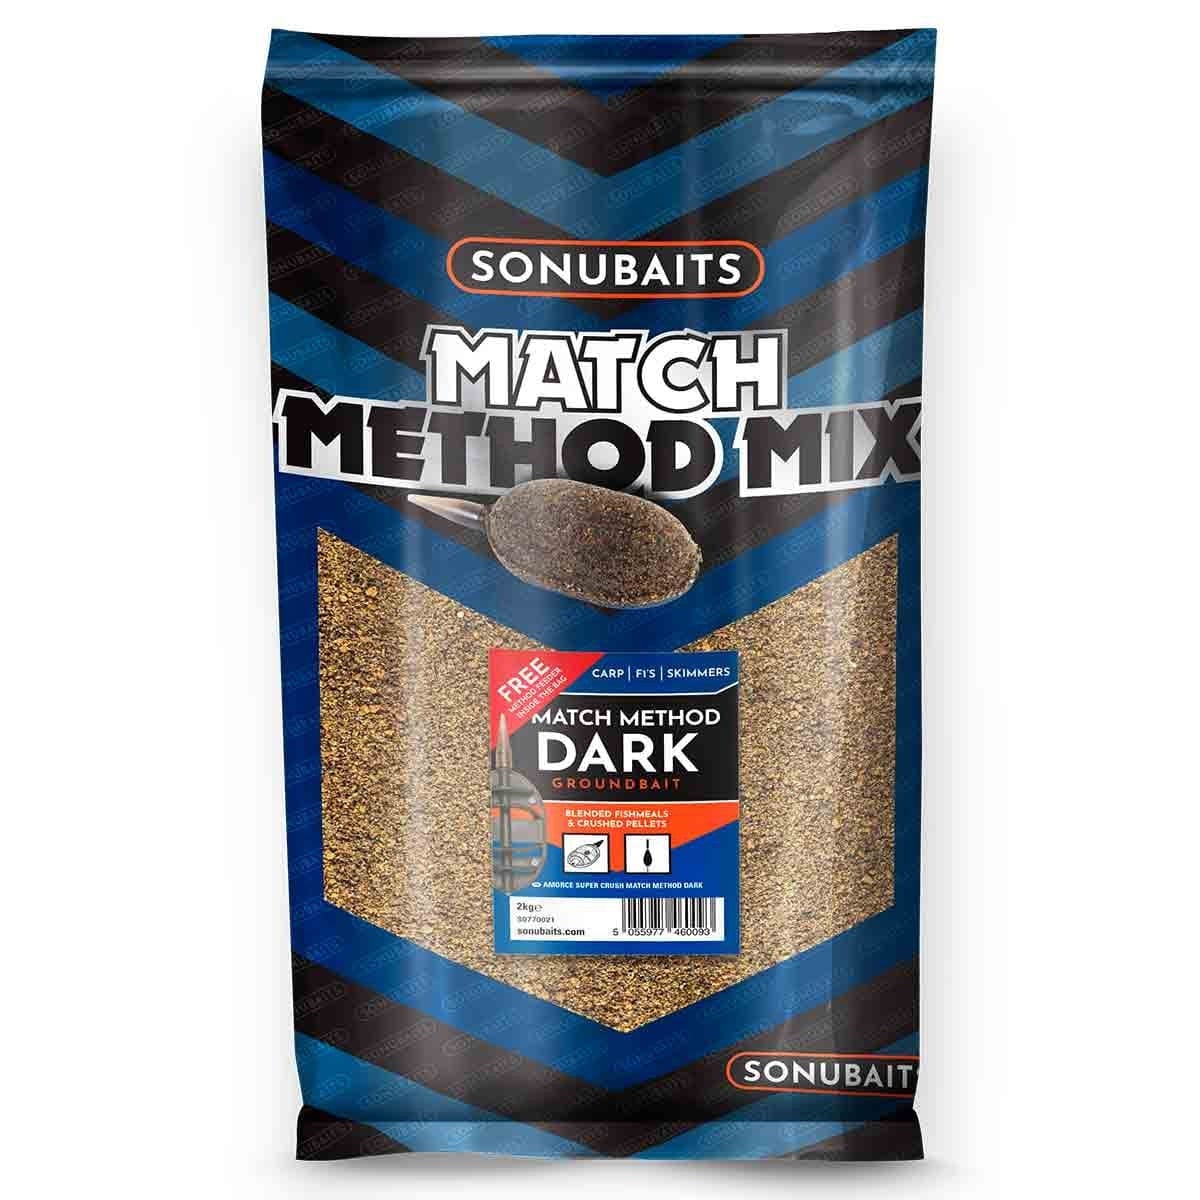 Sonubaits Match Method Mix Dark (2kg).